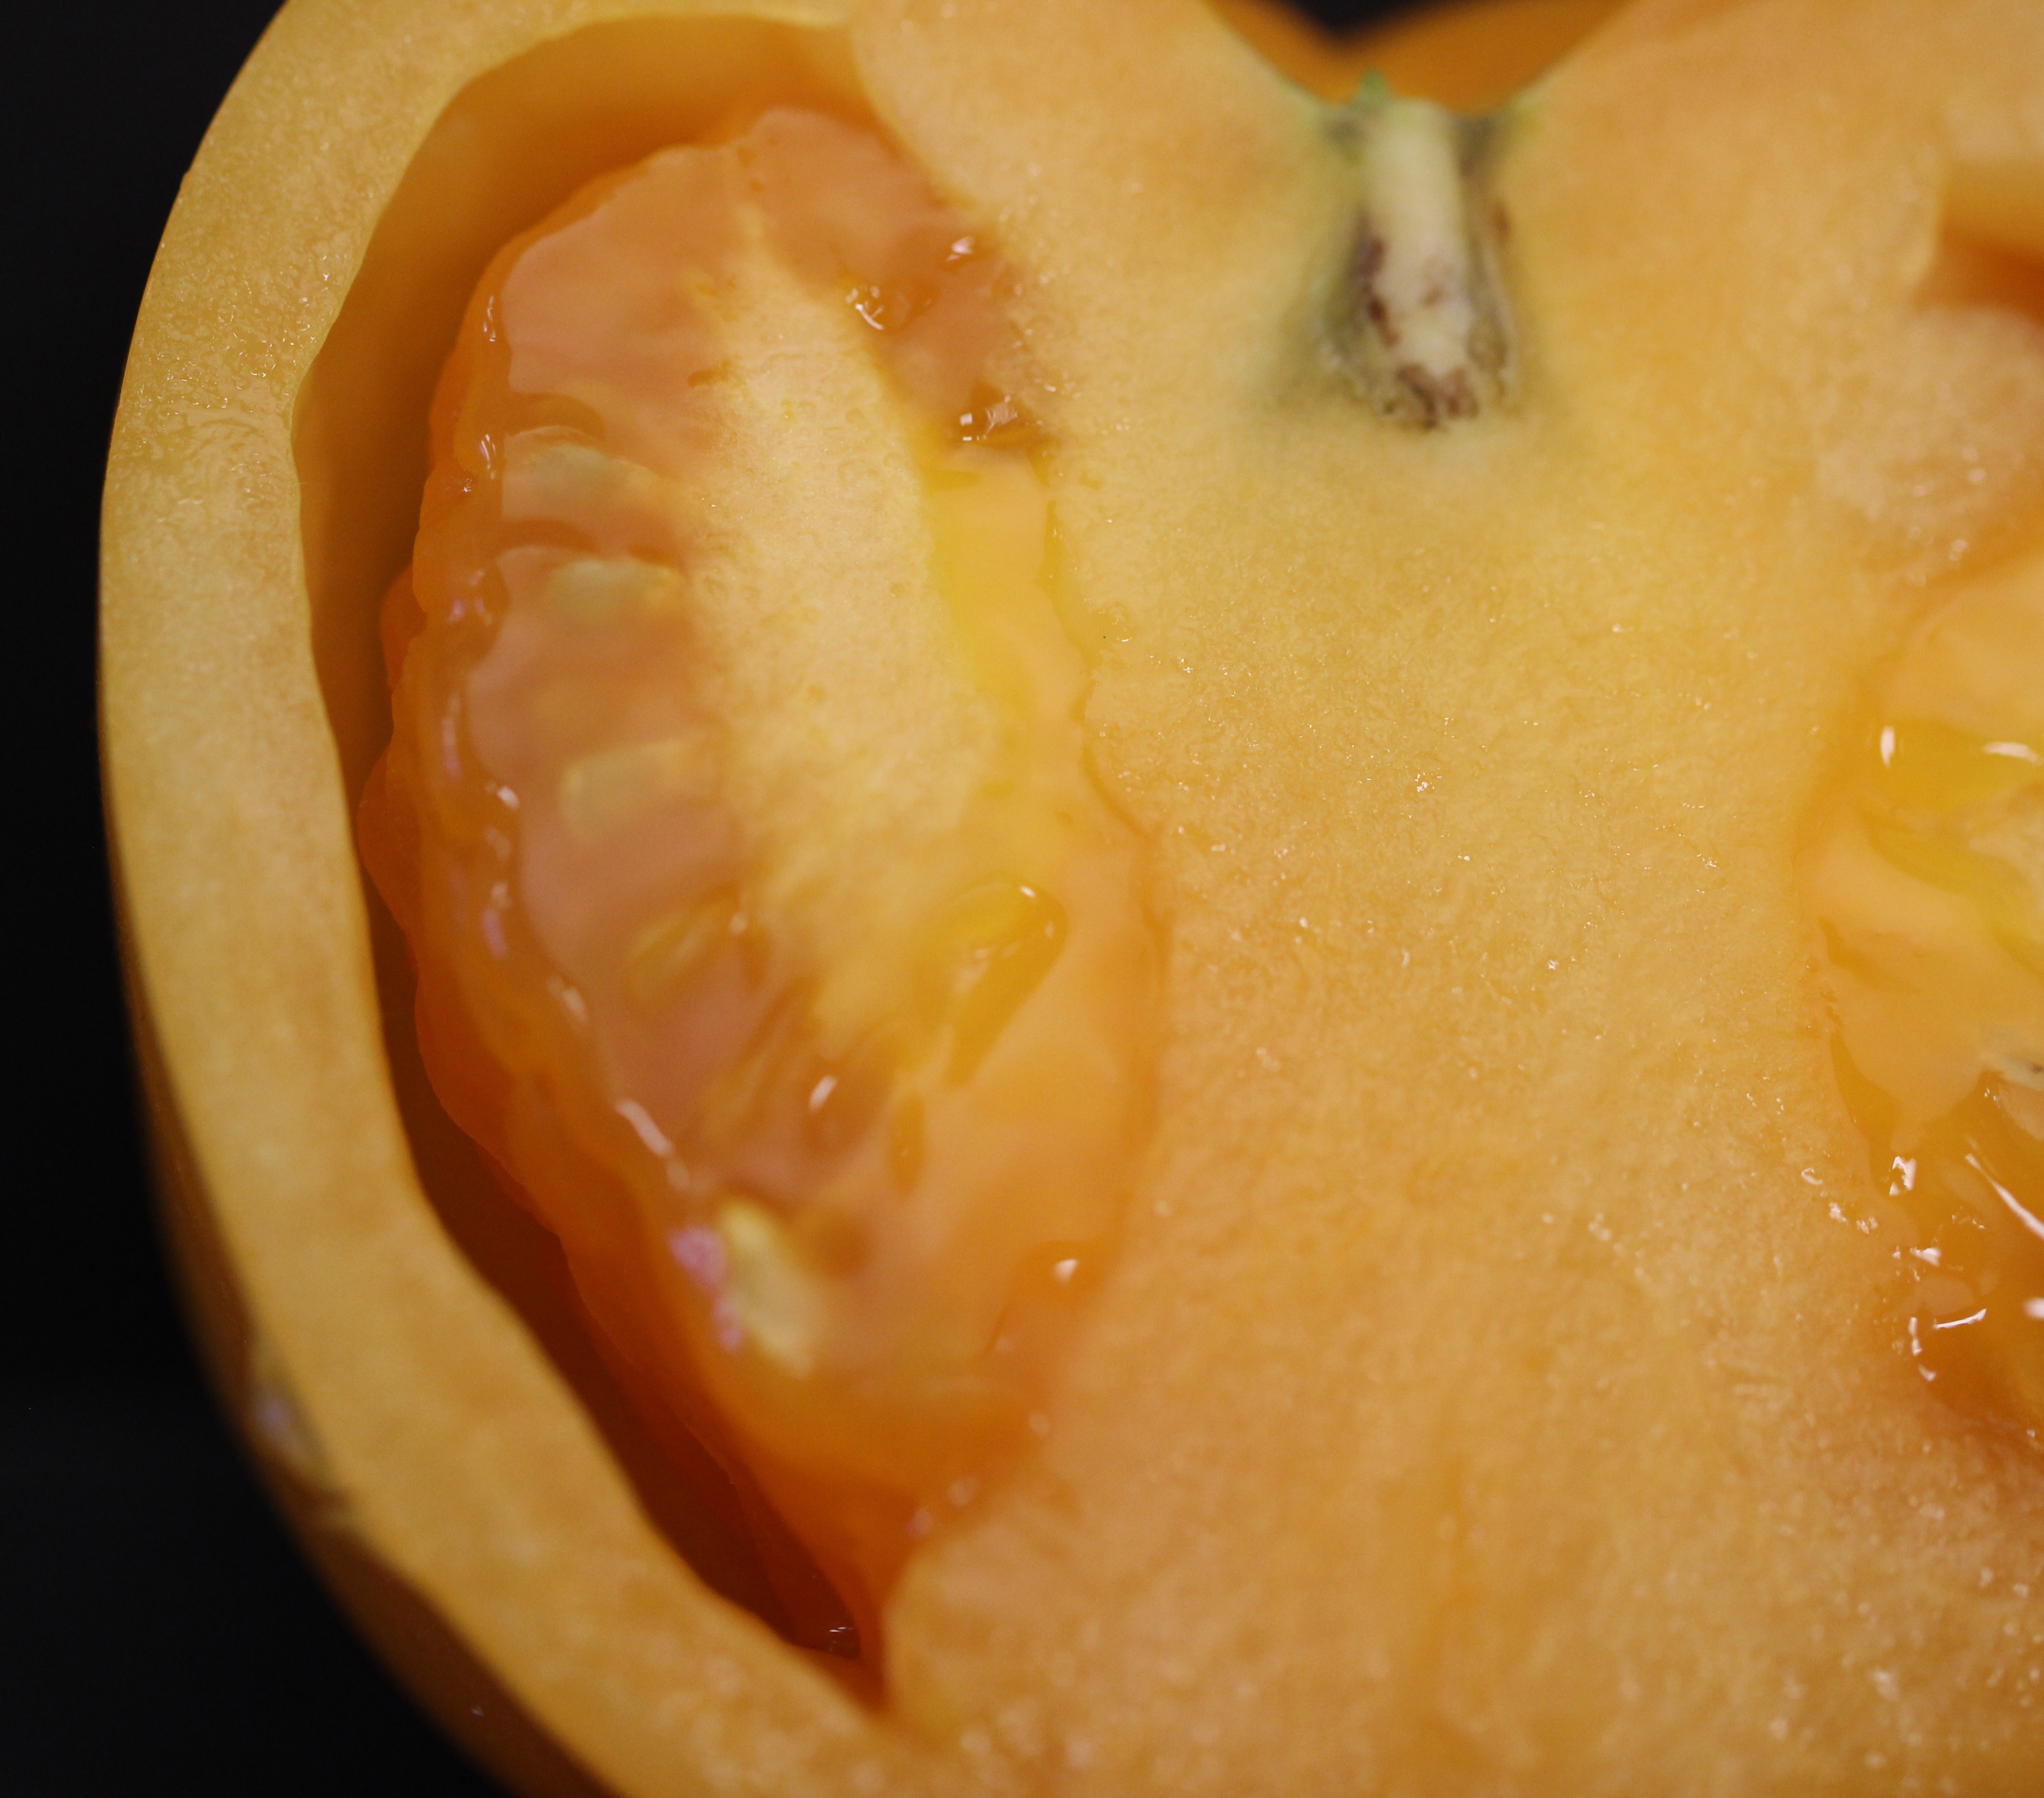 Puffiness of tomato fruit internal symptoms.